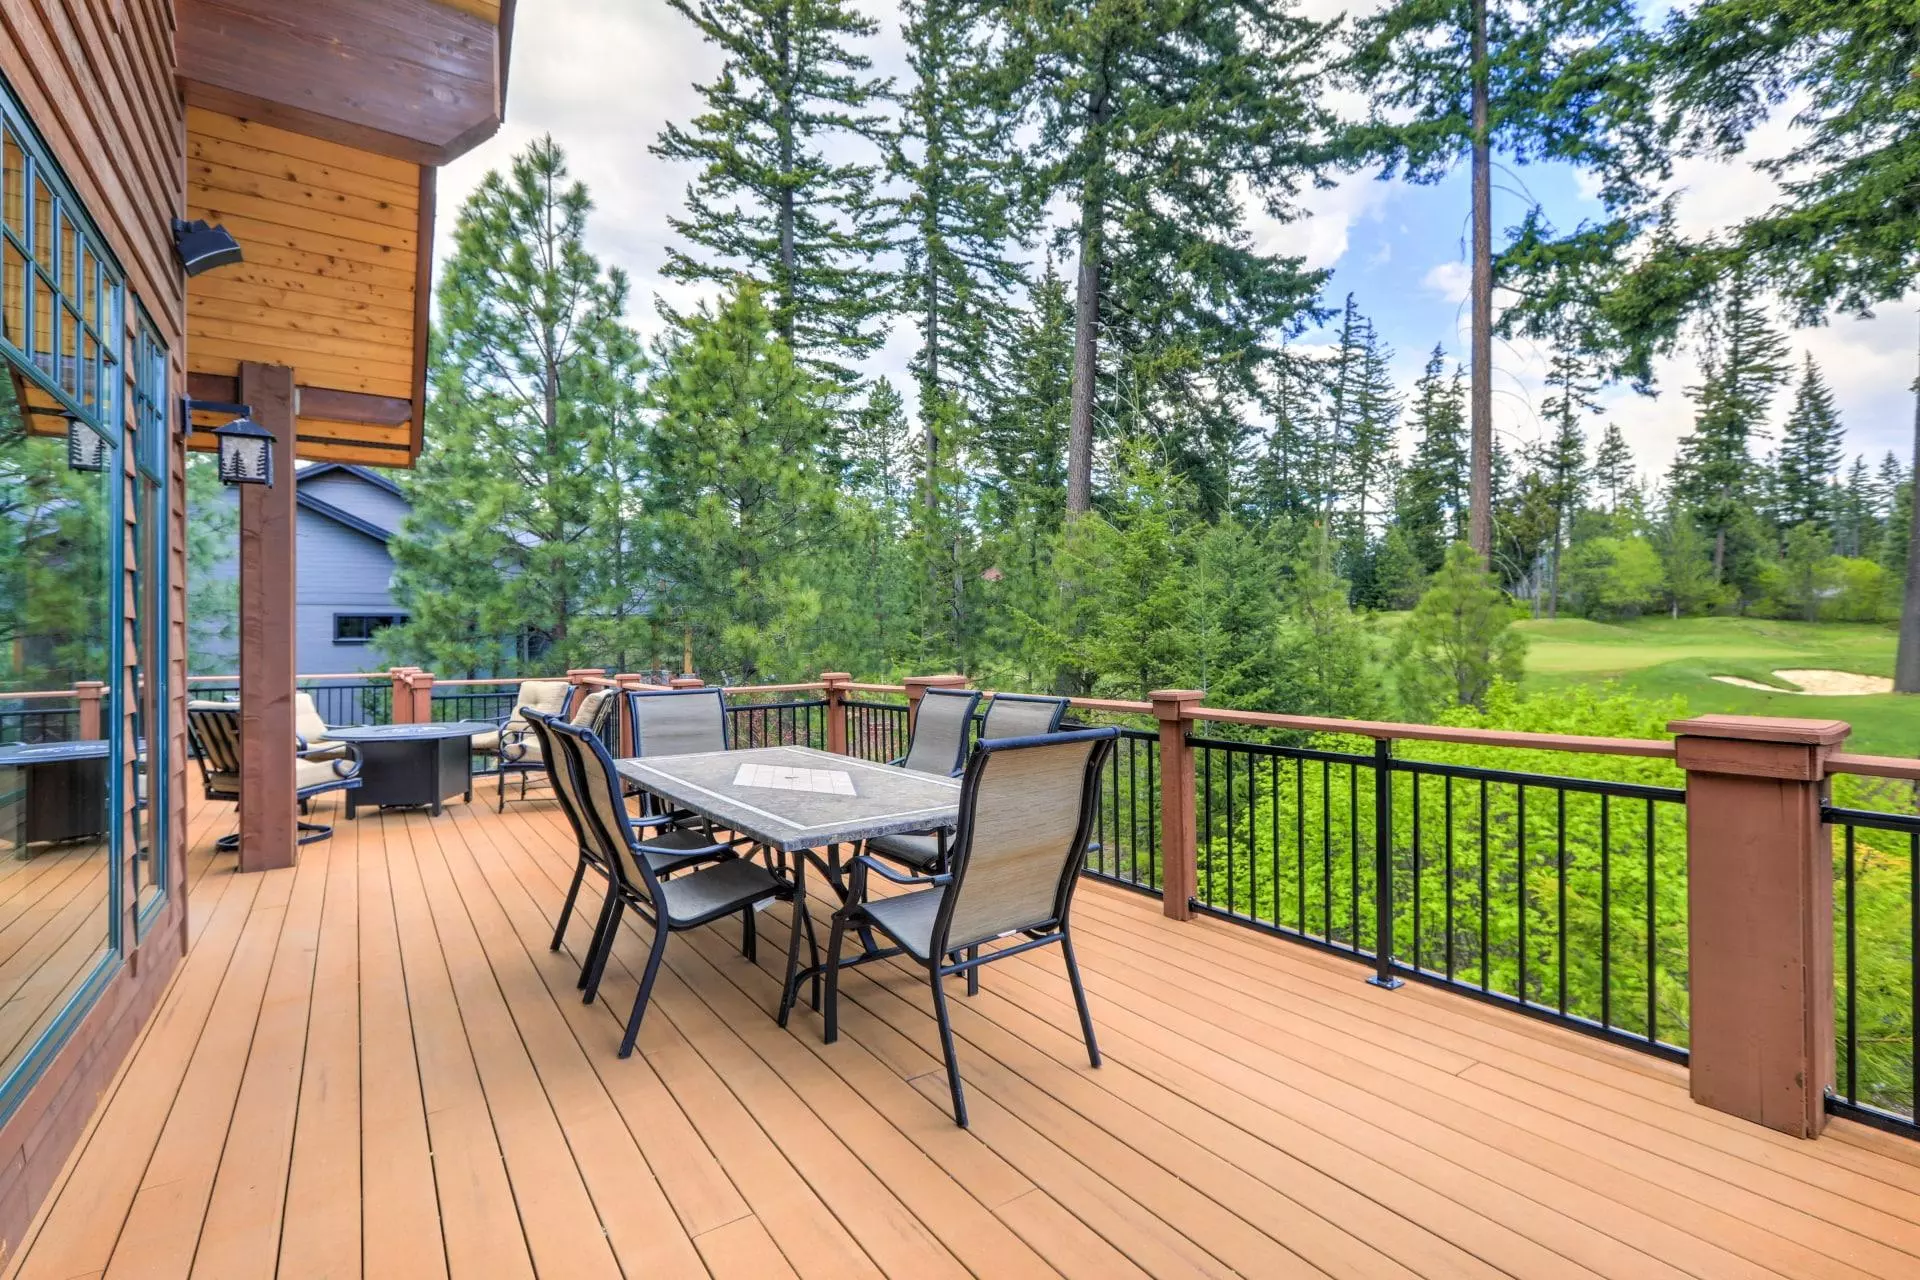 Beautiful backyard and custom deck